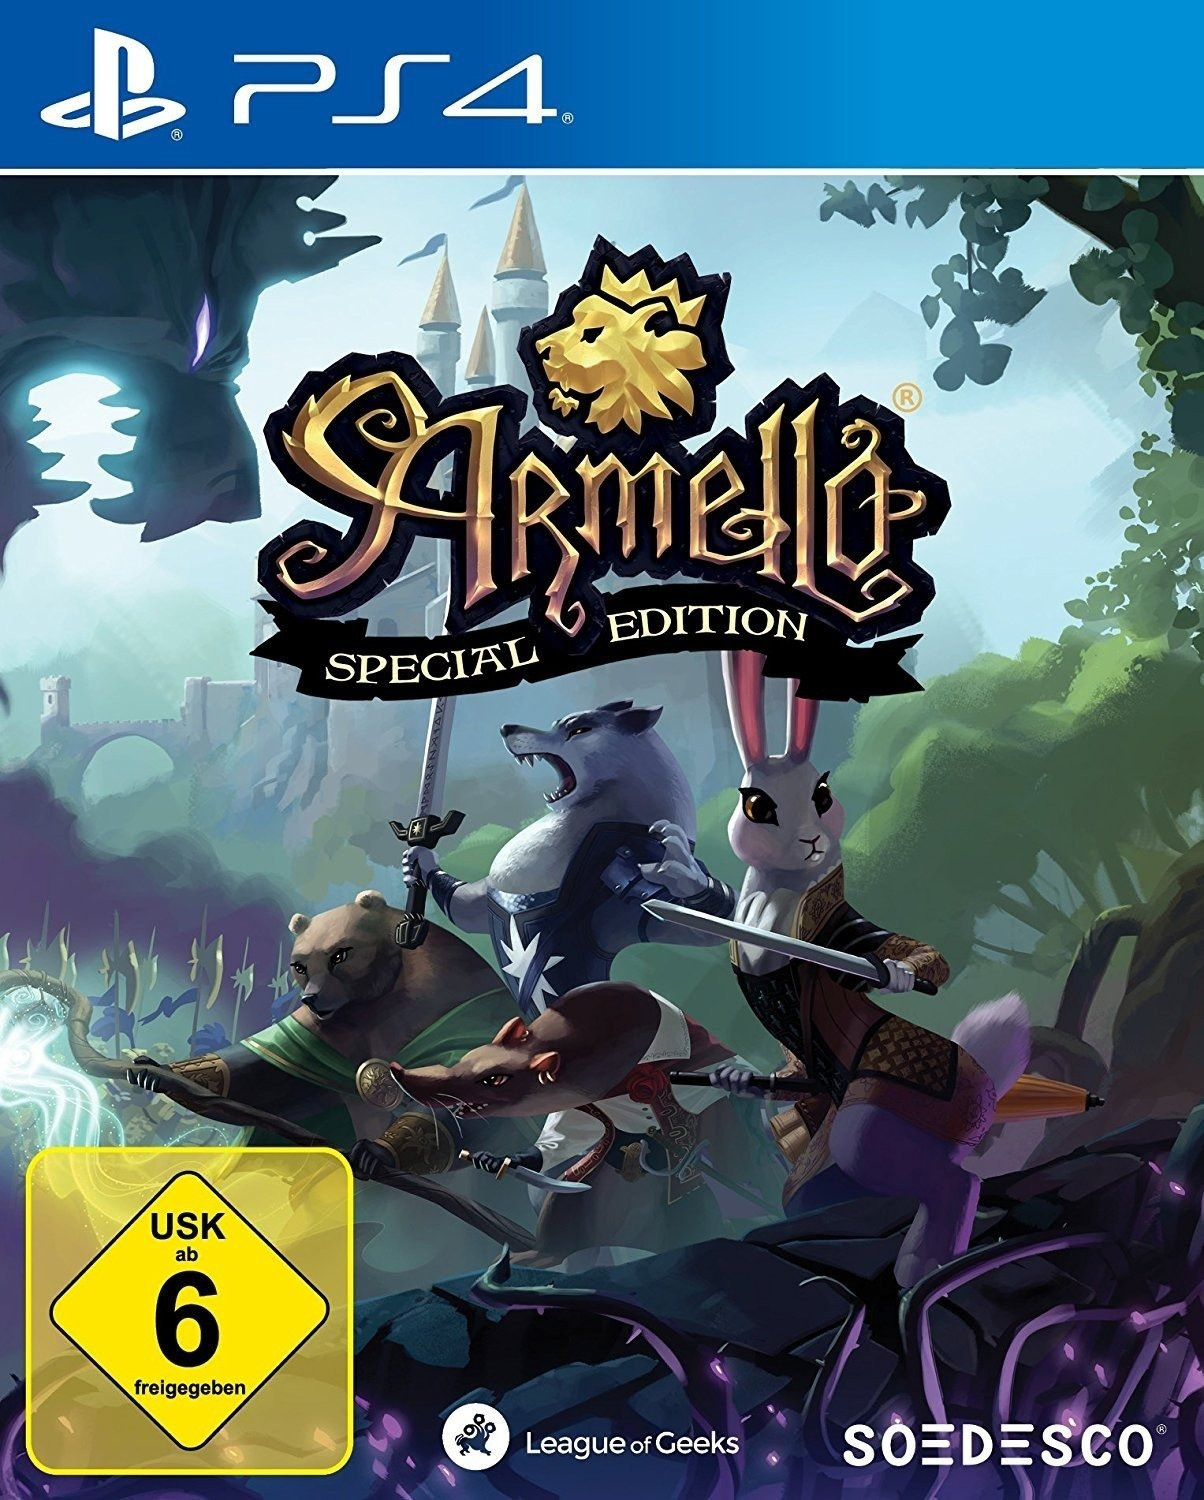 download free armello special edition